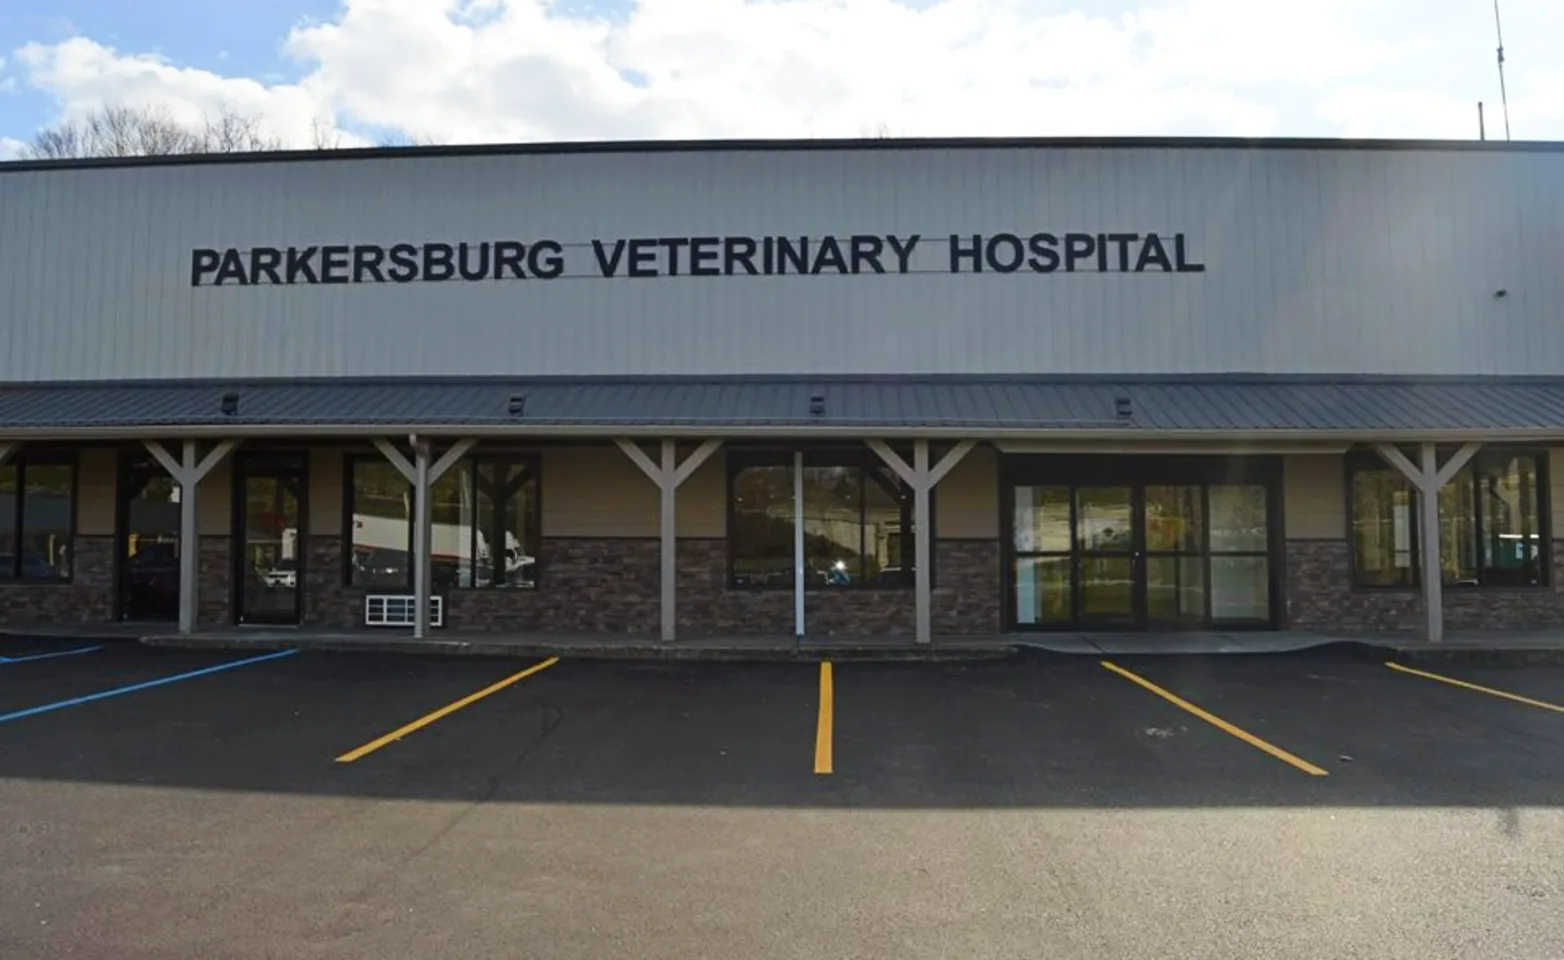 Outside of Parkersburg Veterinary Hospital